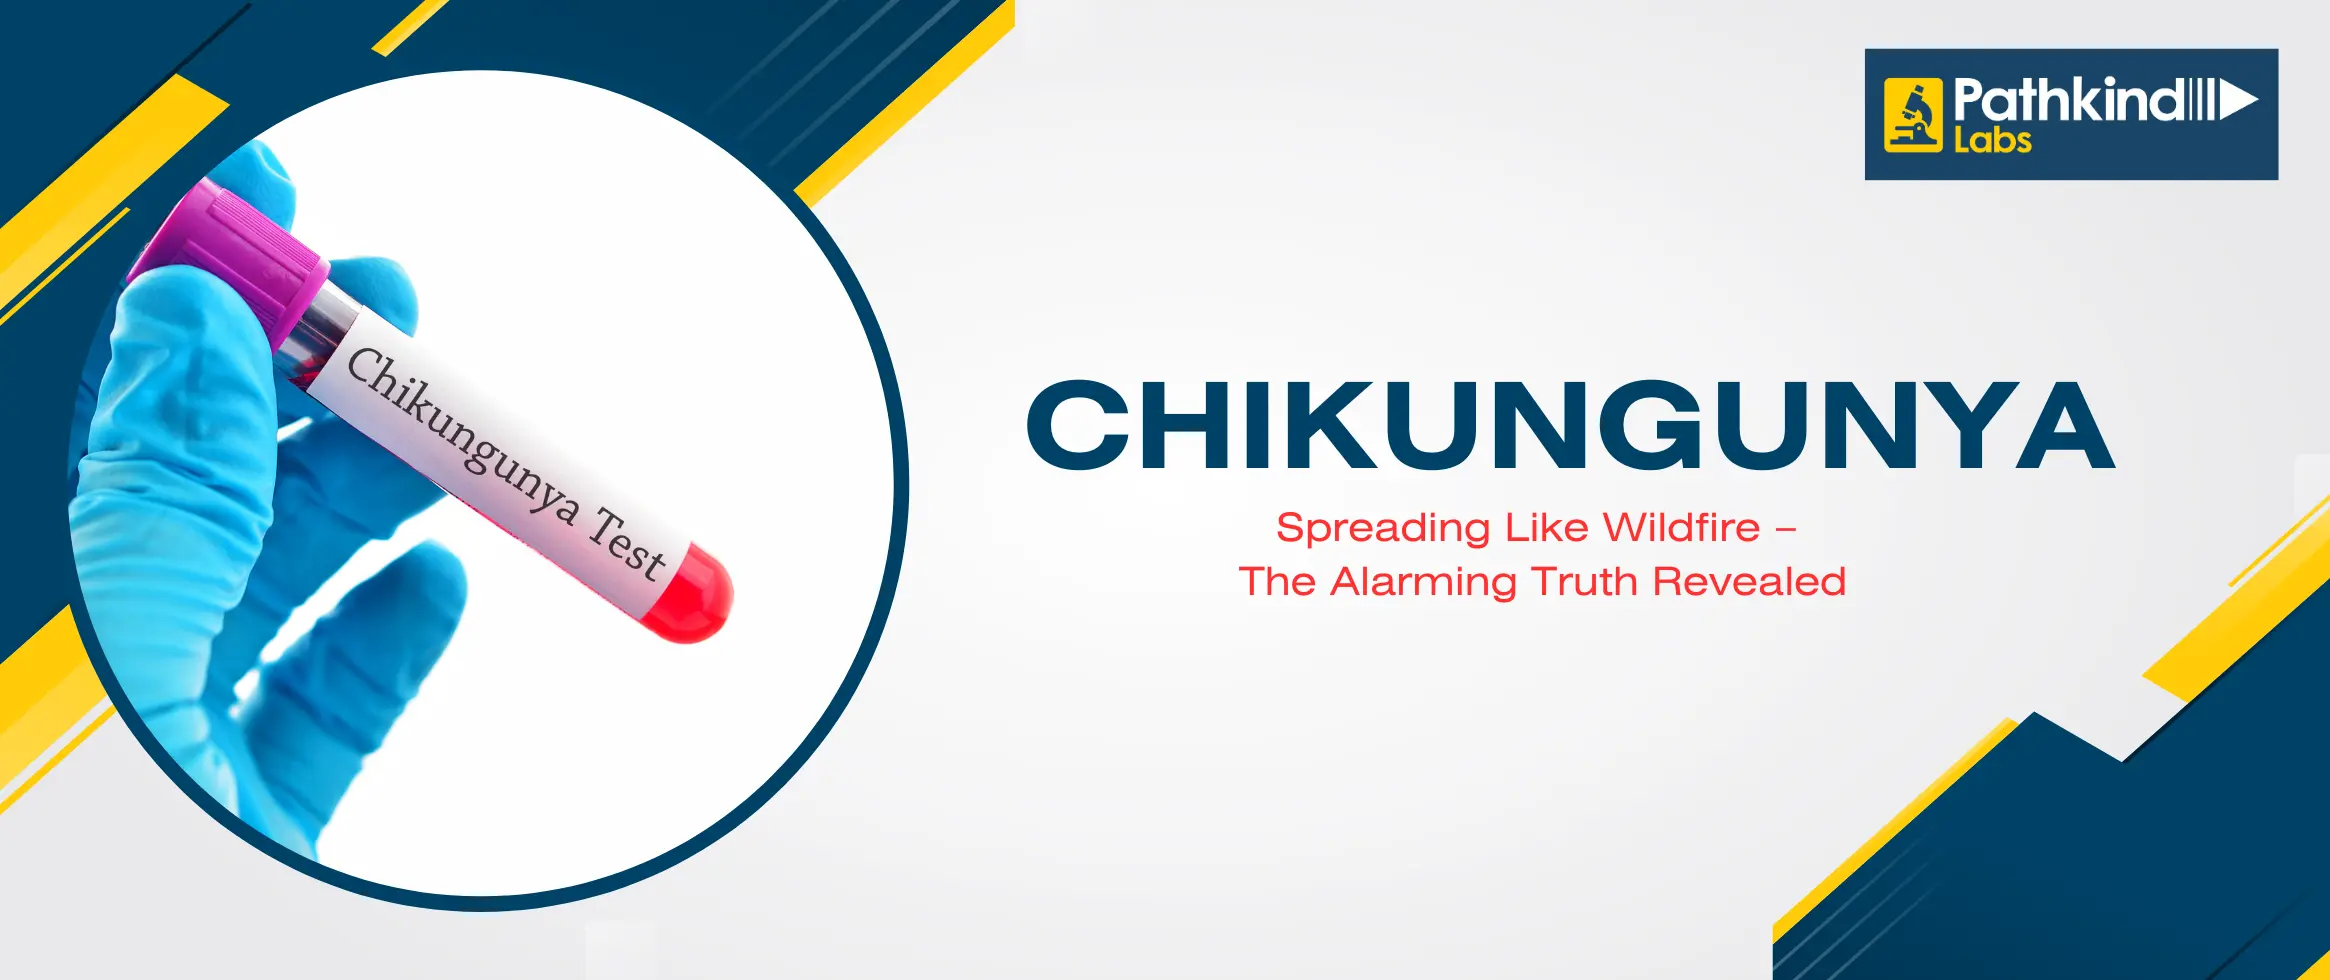  Chikungunya Spreading Like Wildfire – The Alarming Truth Revealed